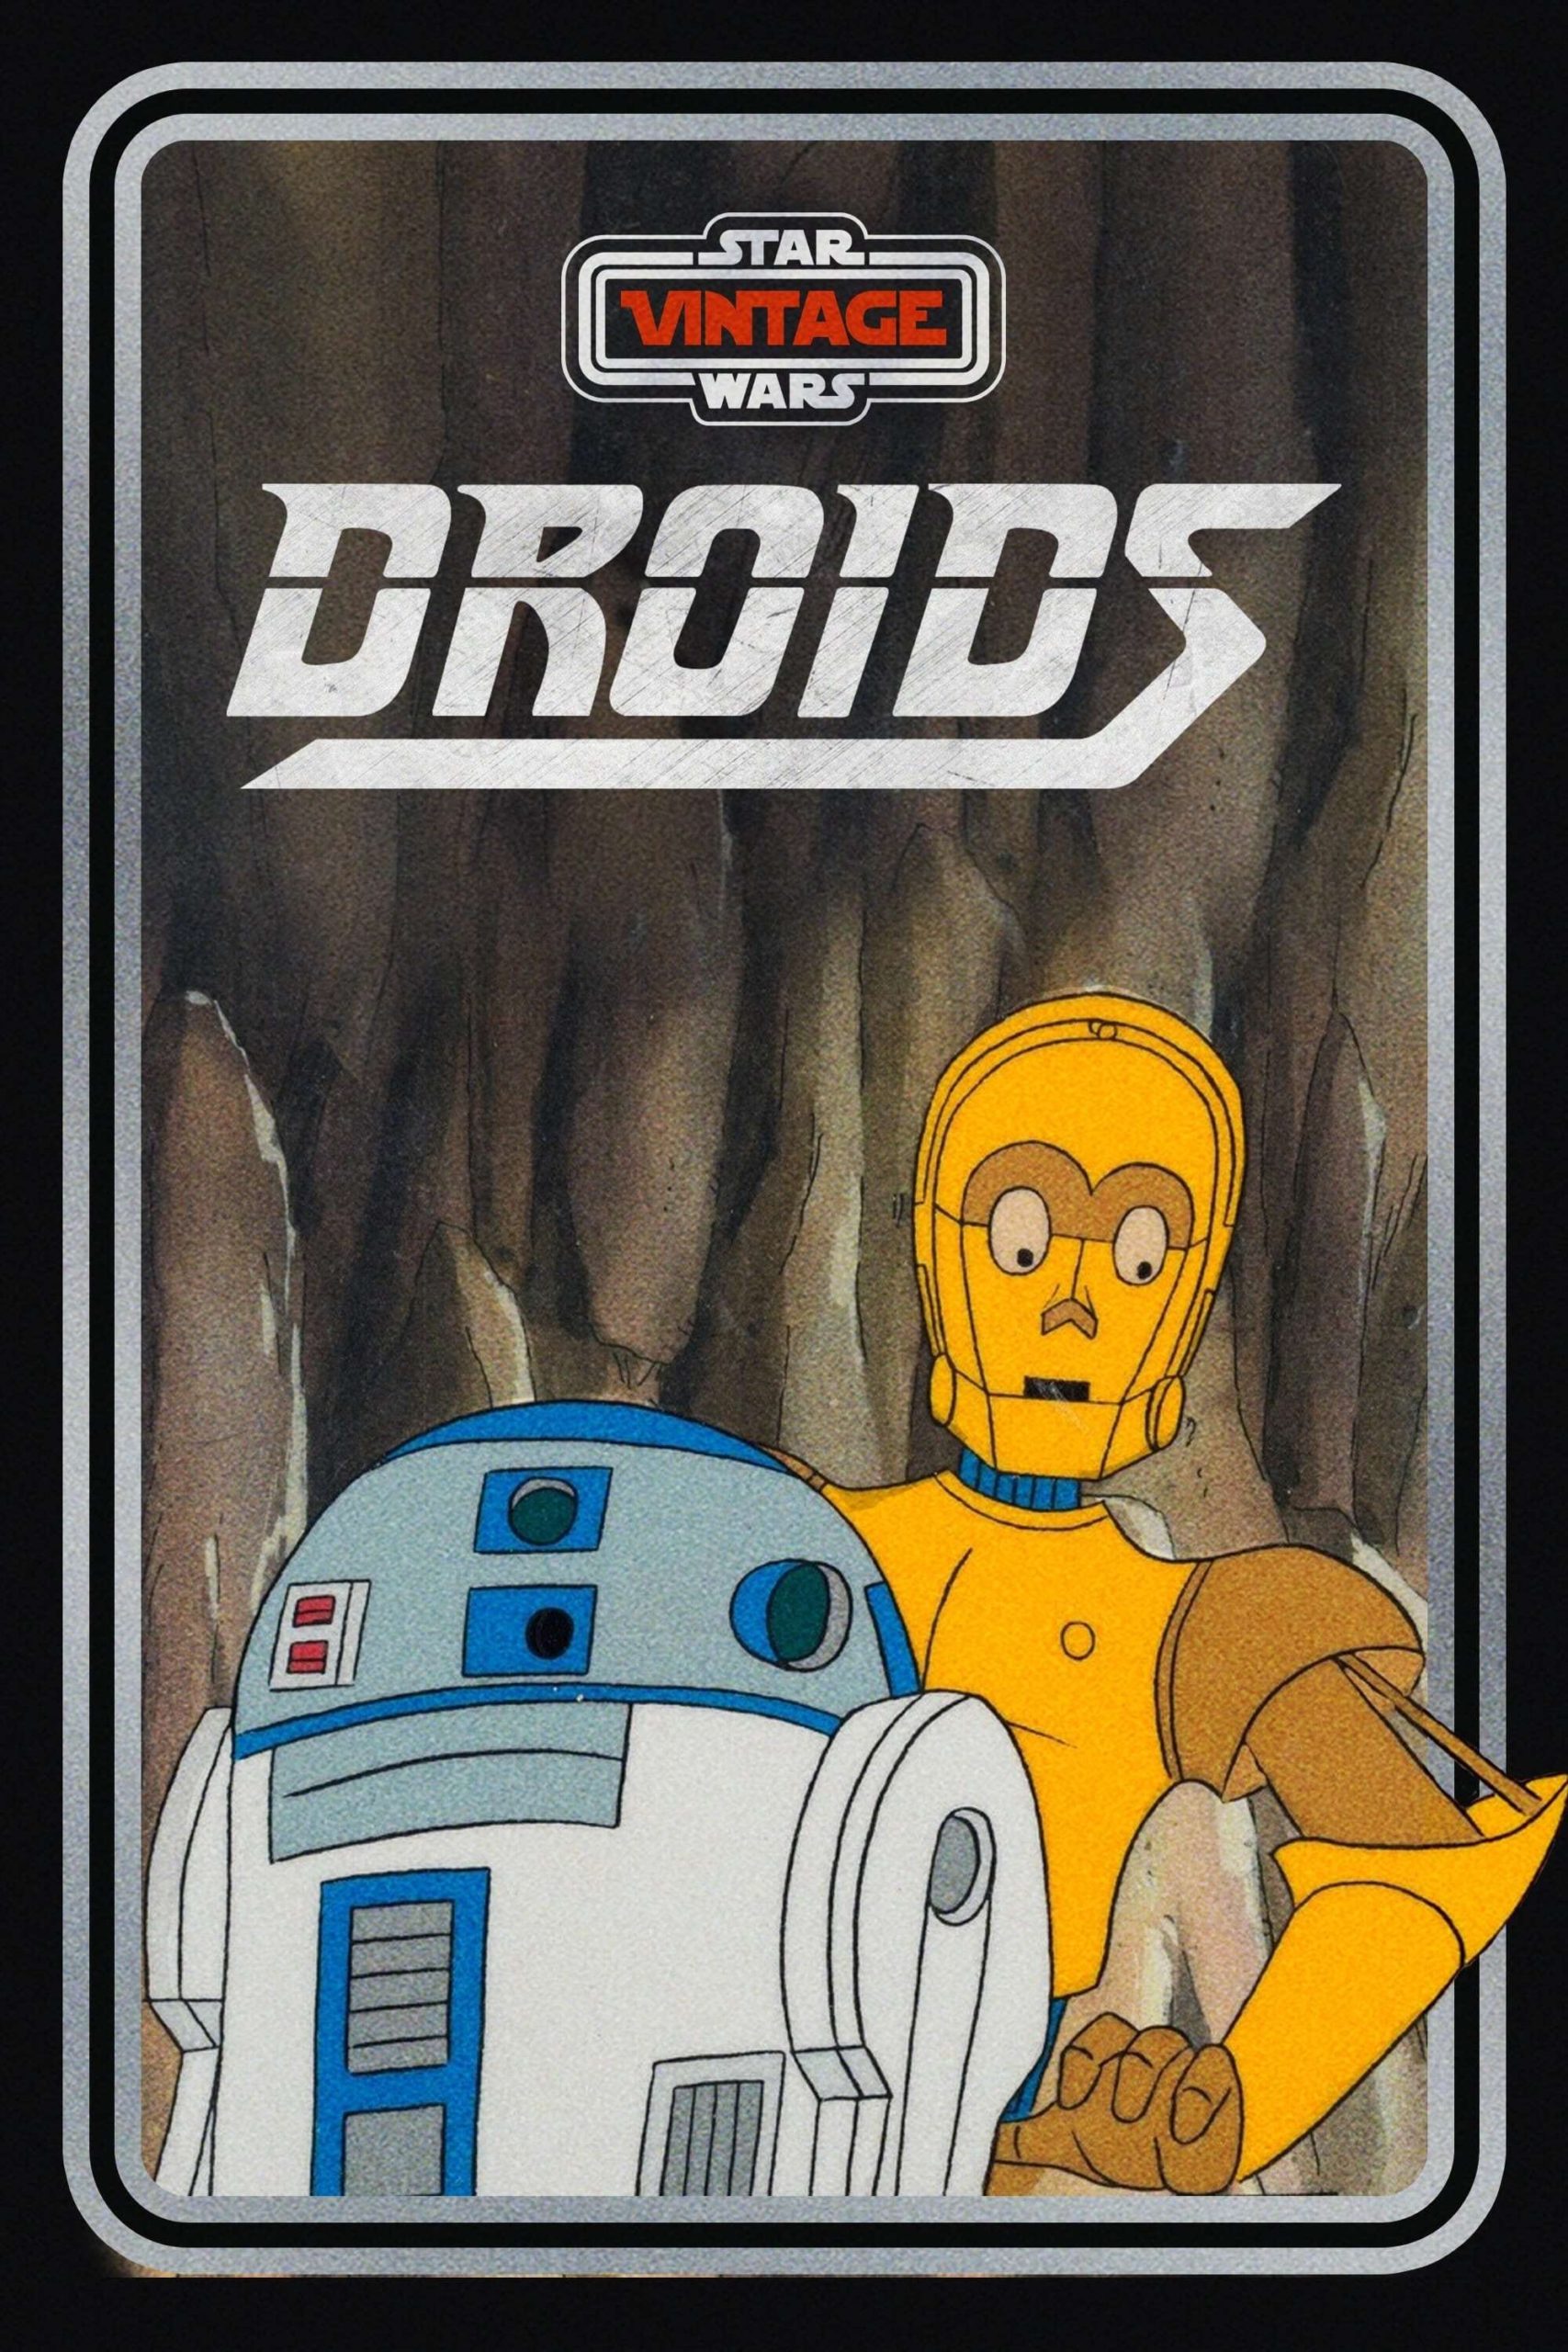 Star Wars: Droids (1985), on Disney+